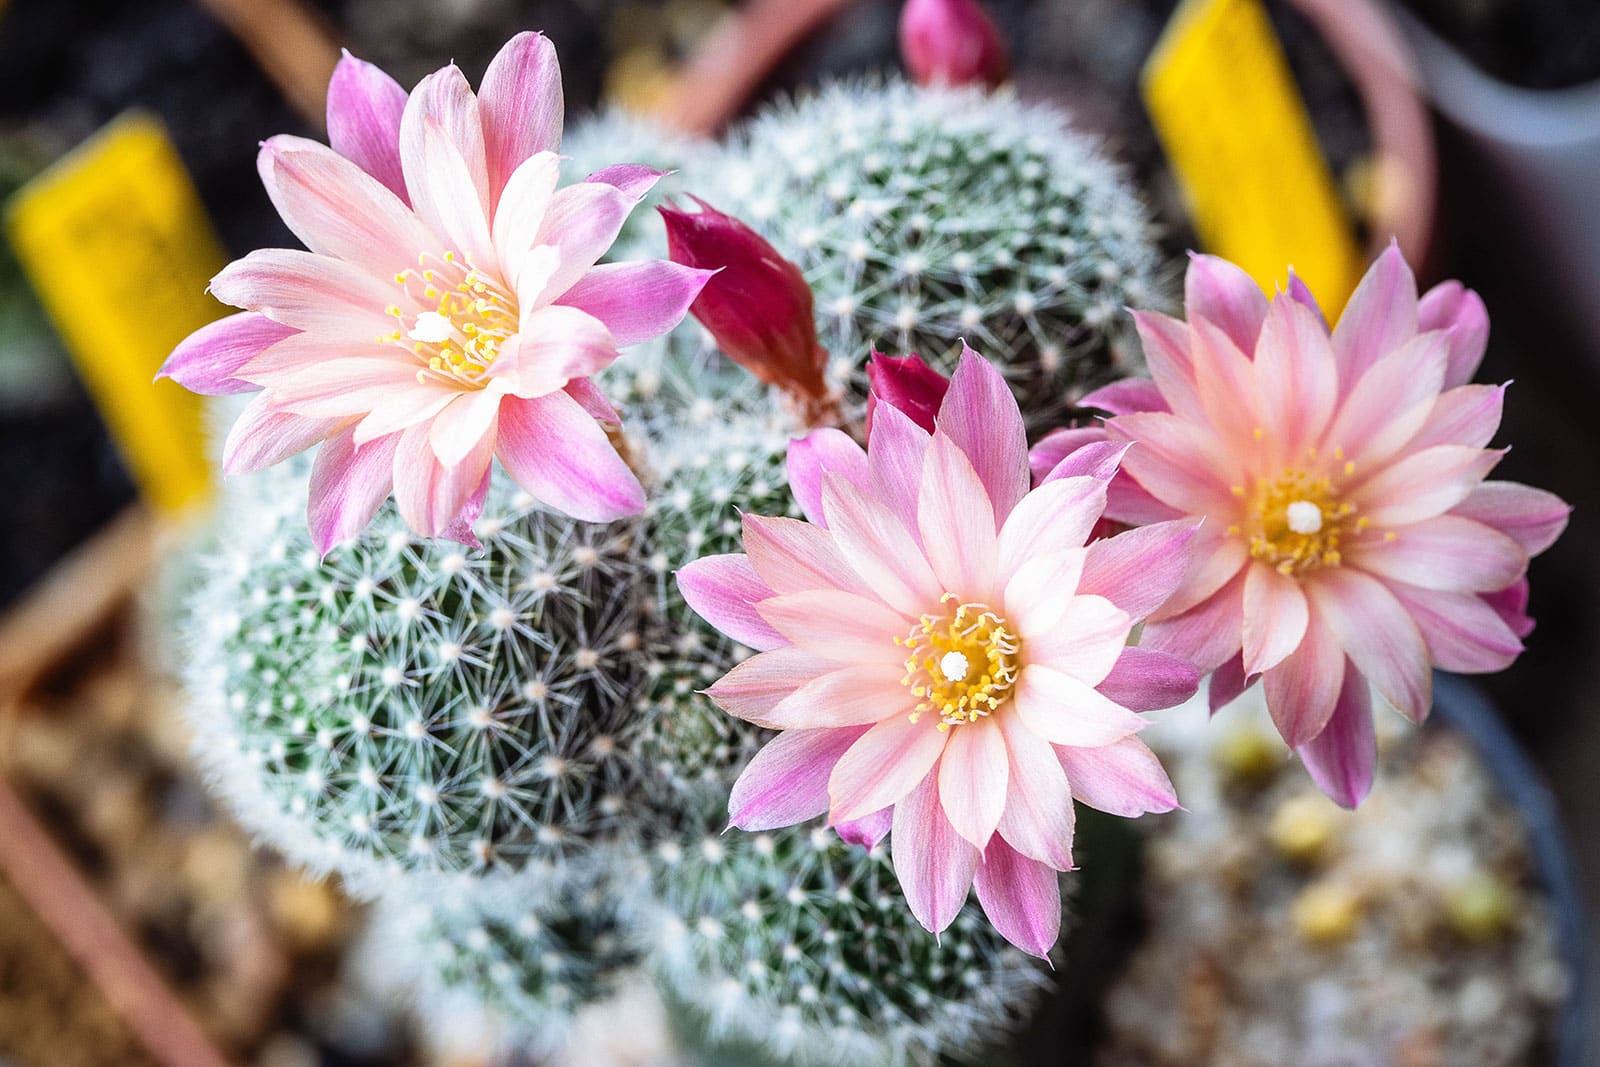 Rebutia carnival cactus with pink flowers